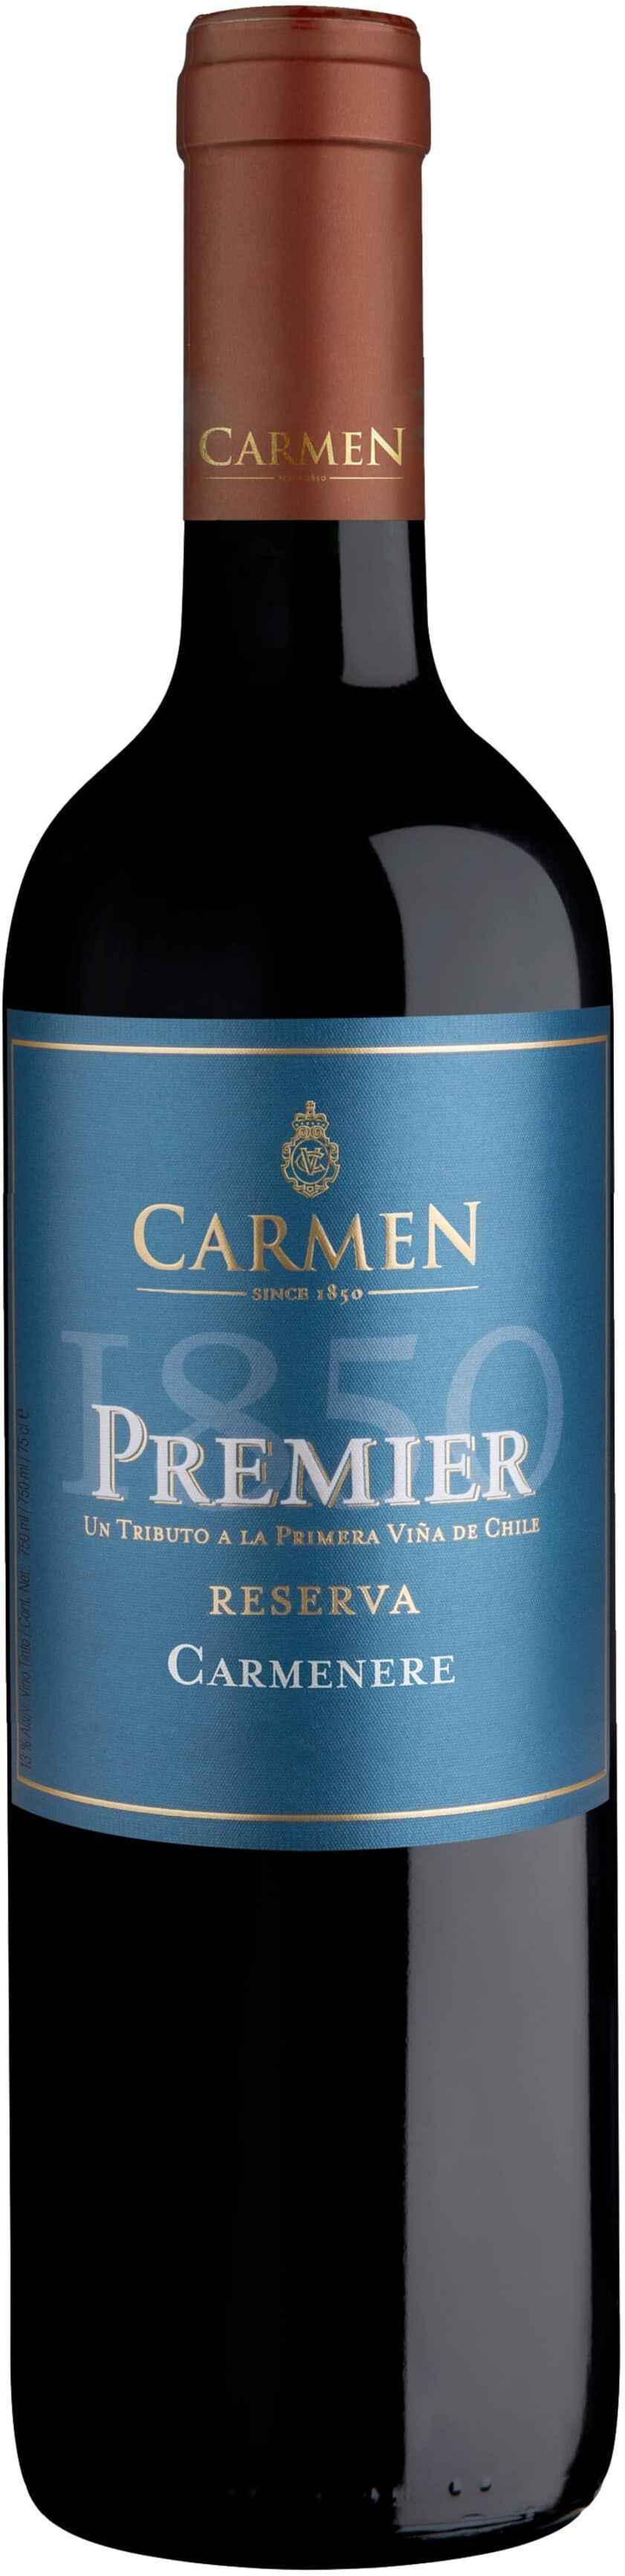 Carmen Carmenere Reserva Premier 1850 'Carmen' 2020